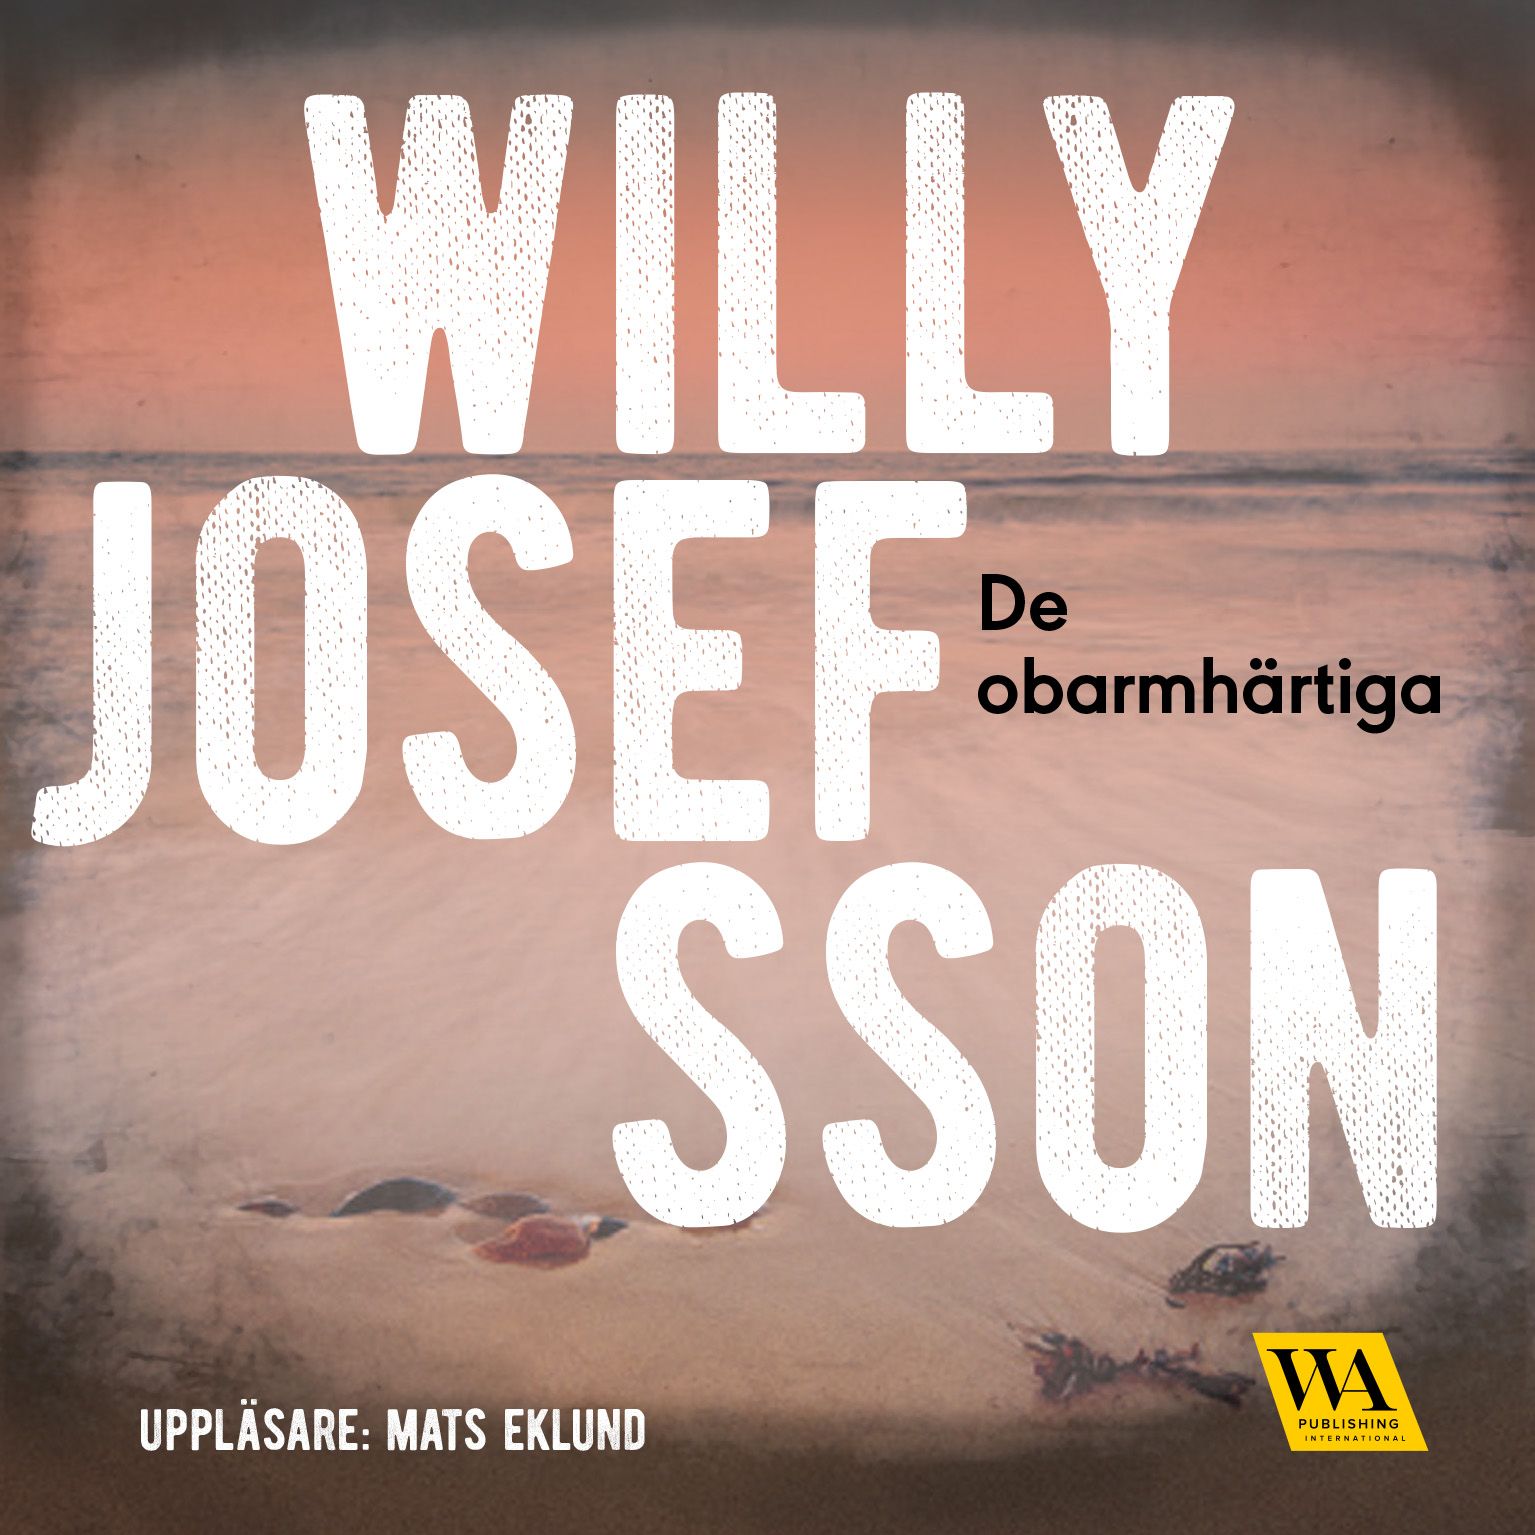 De obarmhärtiga, audiobook by Willy Josefsson